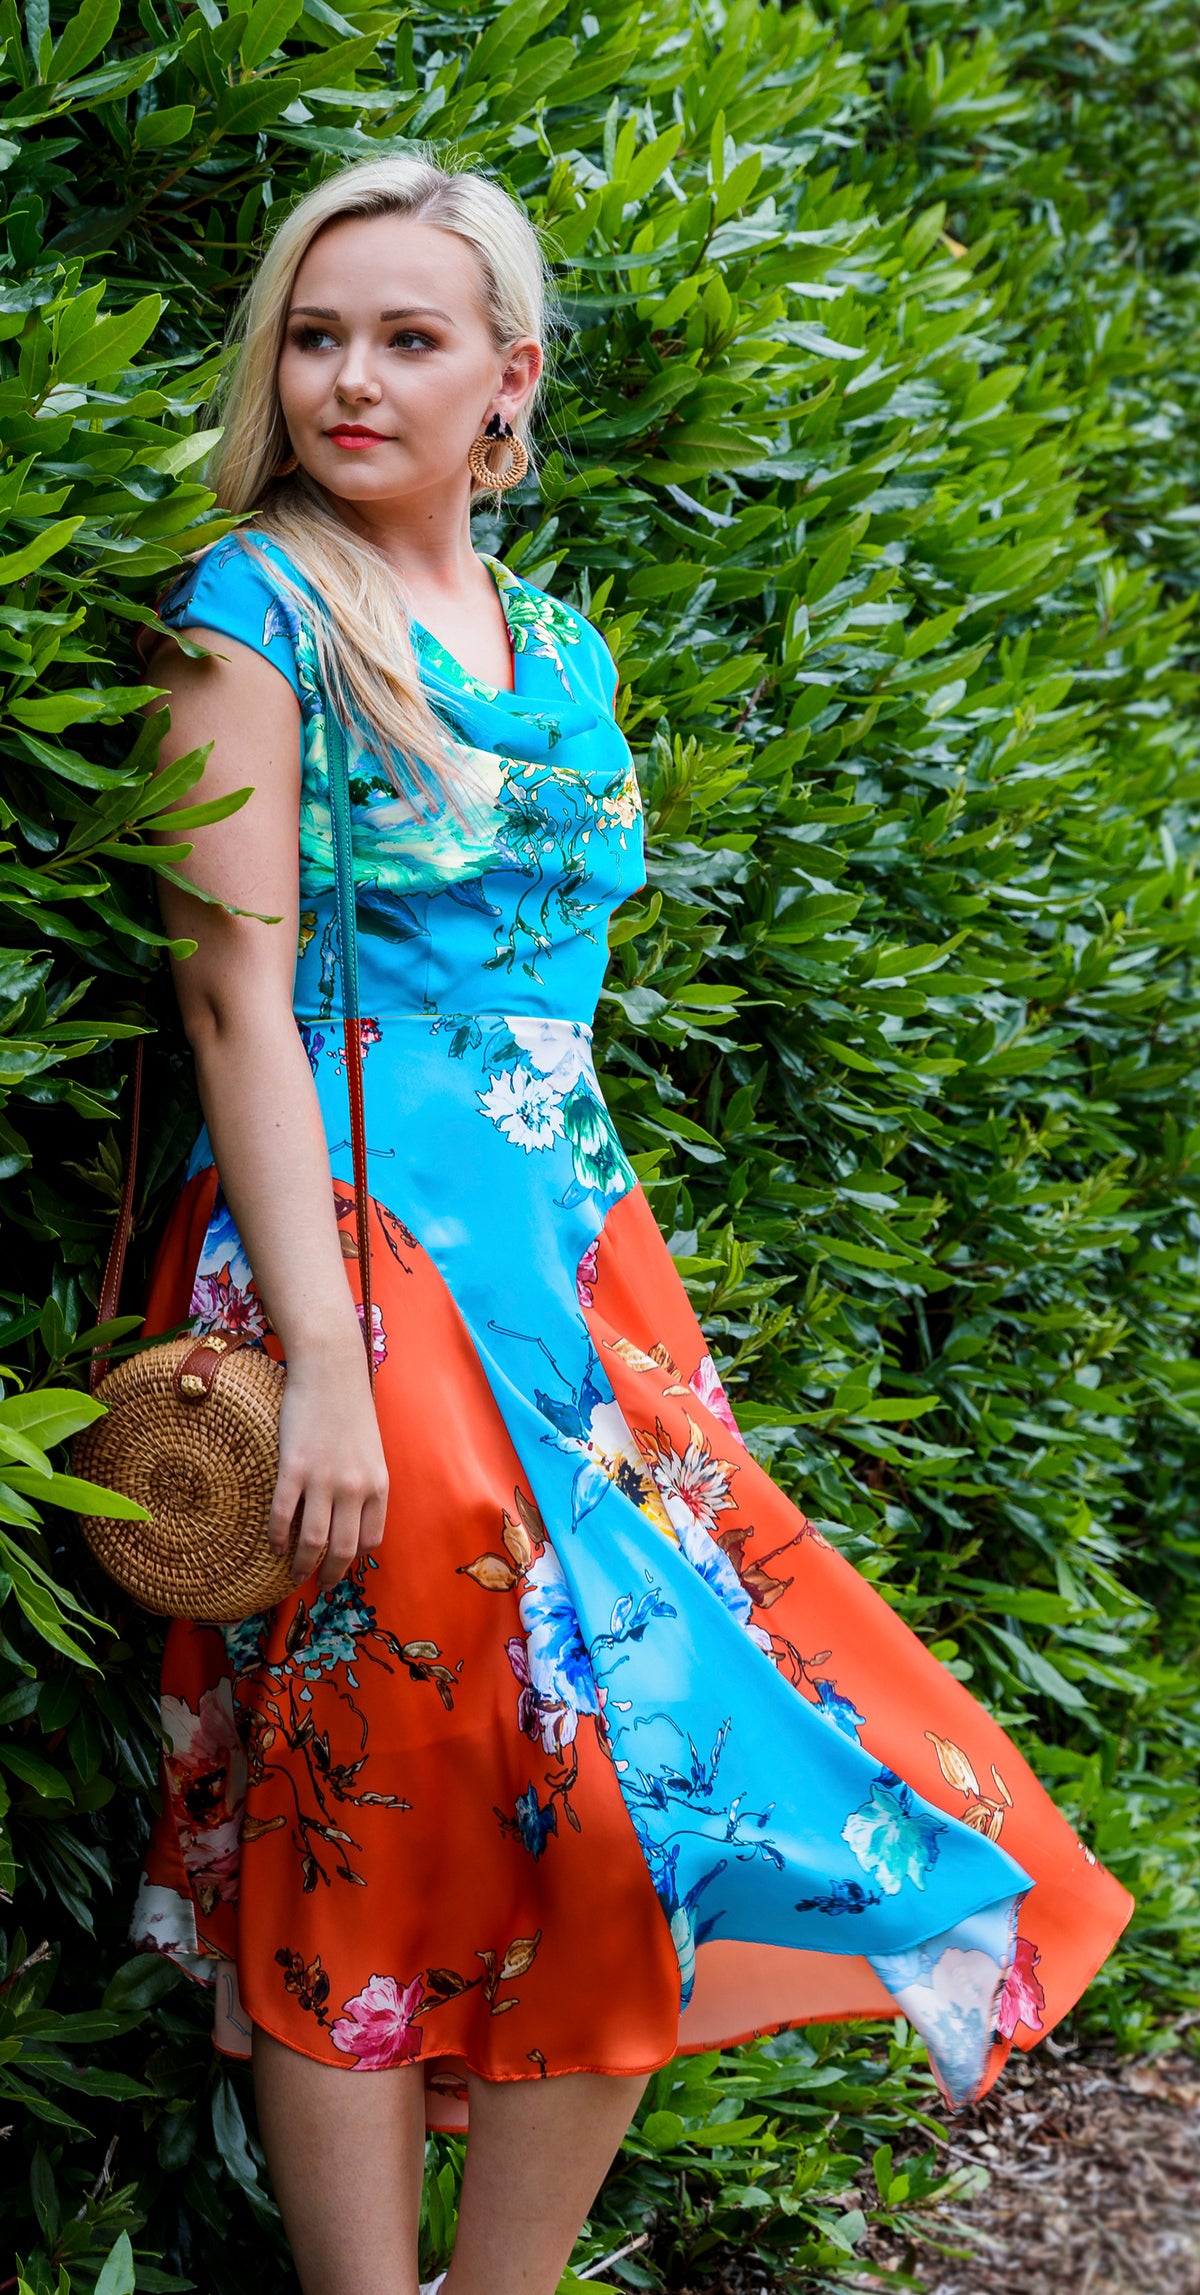 Kelly Dress DRC306 Turquoise Vibrant Floral Print